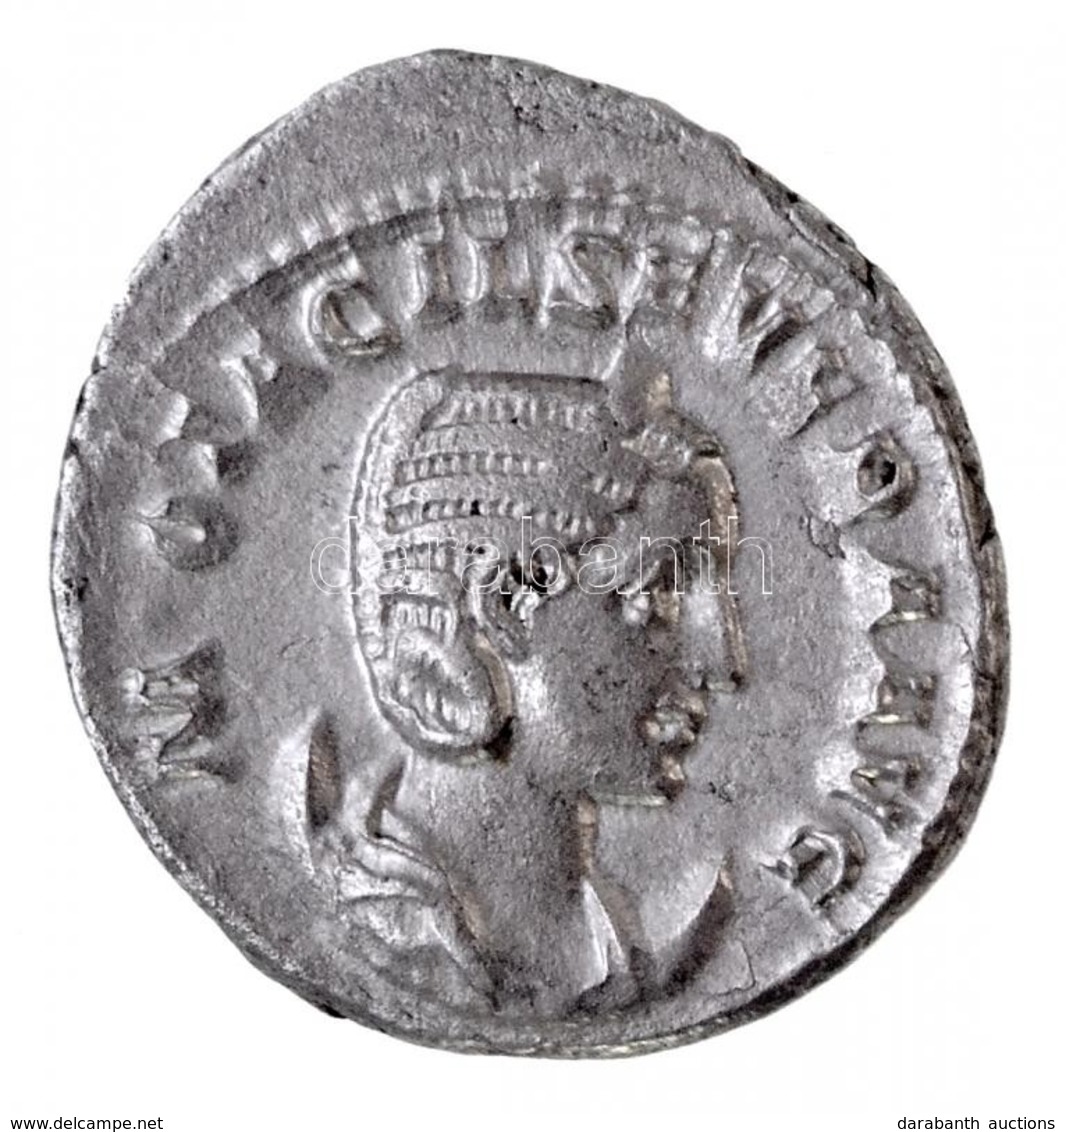 Római Birodalom / Róma / Otacilia Severa 244-249. Antoninianus Ag (4,55g) T:2- Roman Empire / Rome / Otacilia Severa 244 - Sin Clasificación